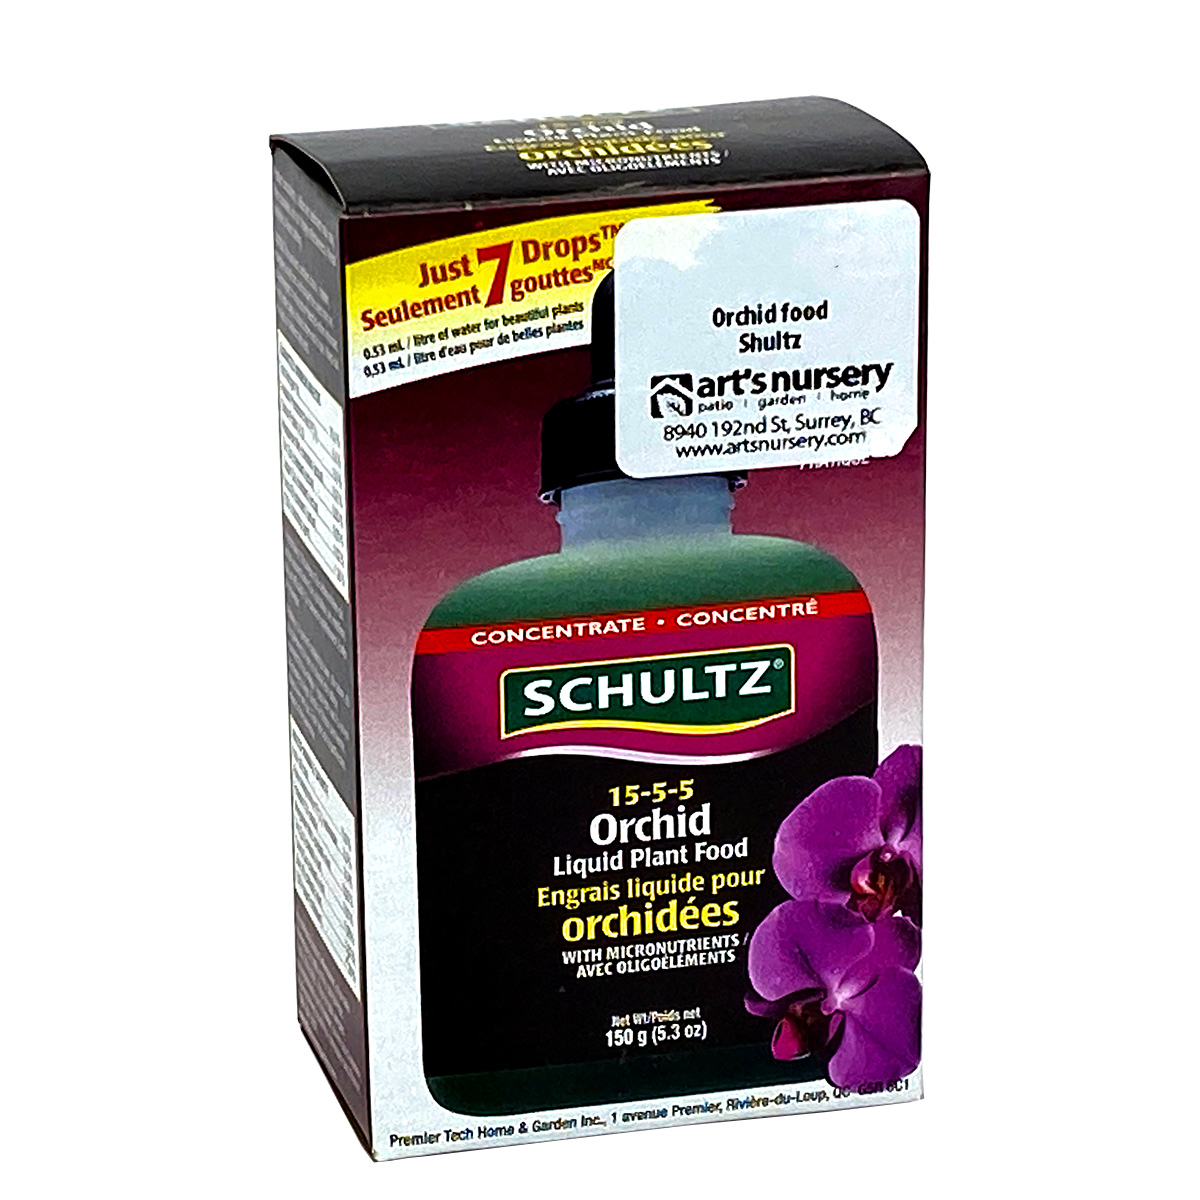 Shultz Orchid Liquid Plant Food 15-5-5 